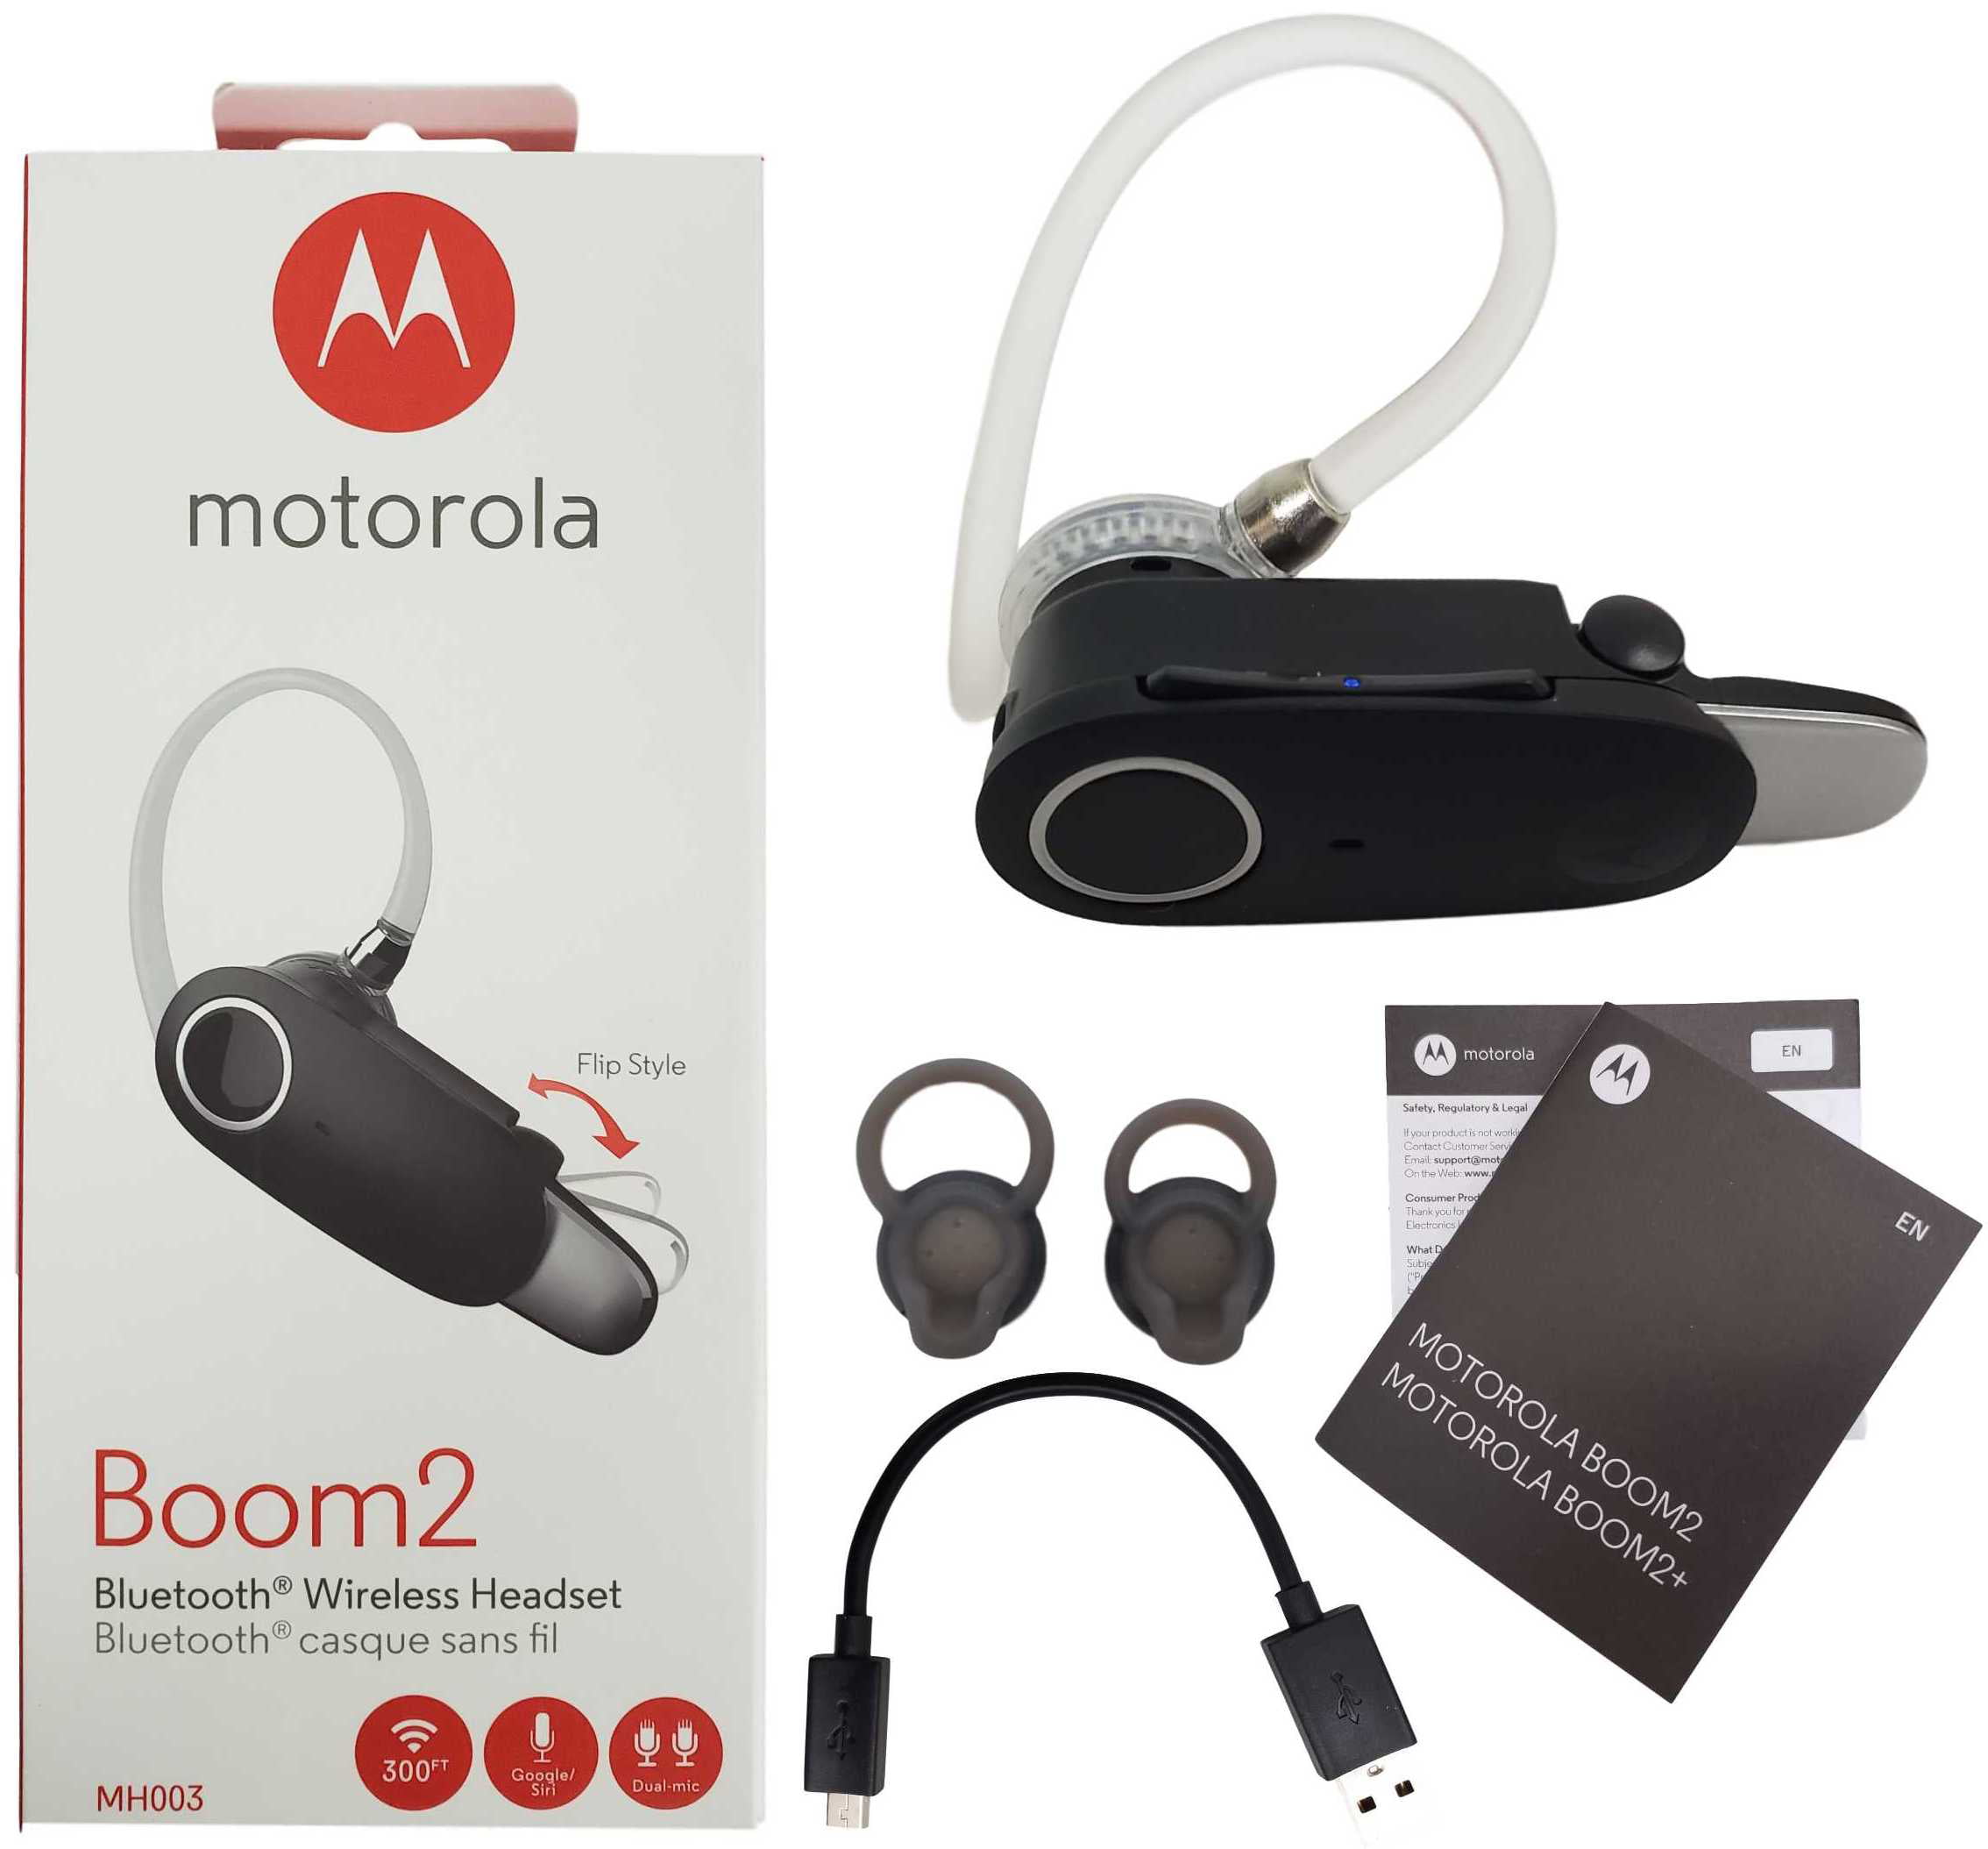 Motorola Boom 2 HD Audio Flip Bluetooth Wireless Headset Foldable with Over-The-Ear Hook & 300ft Range (US Retail Packaging) Walmart.com